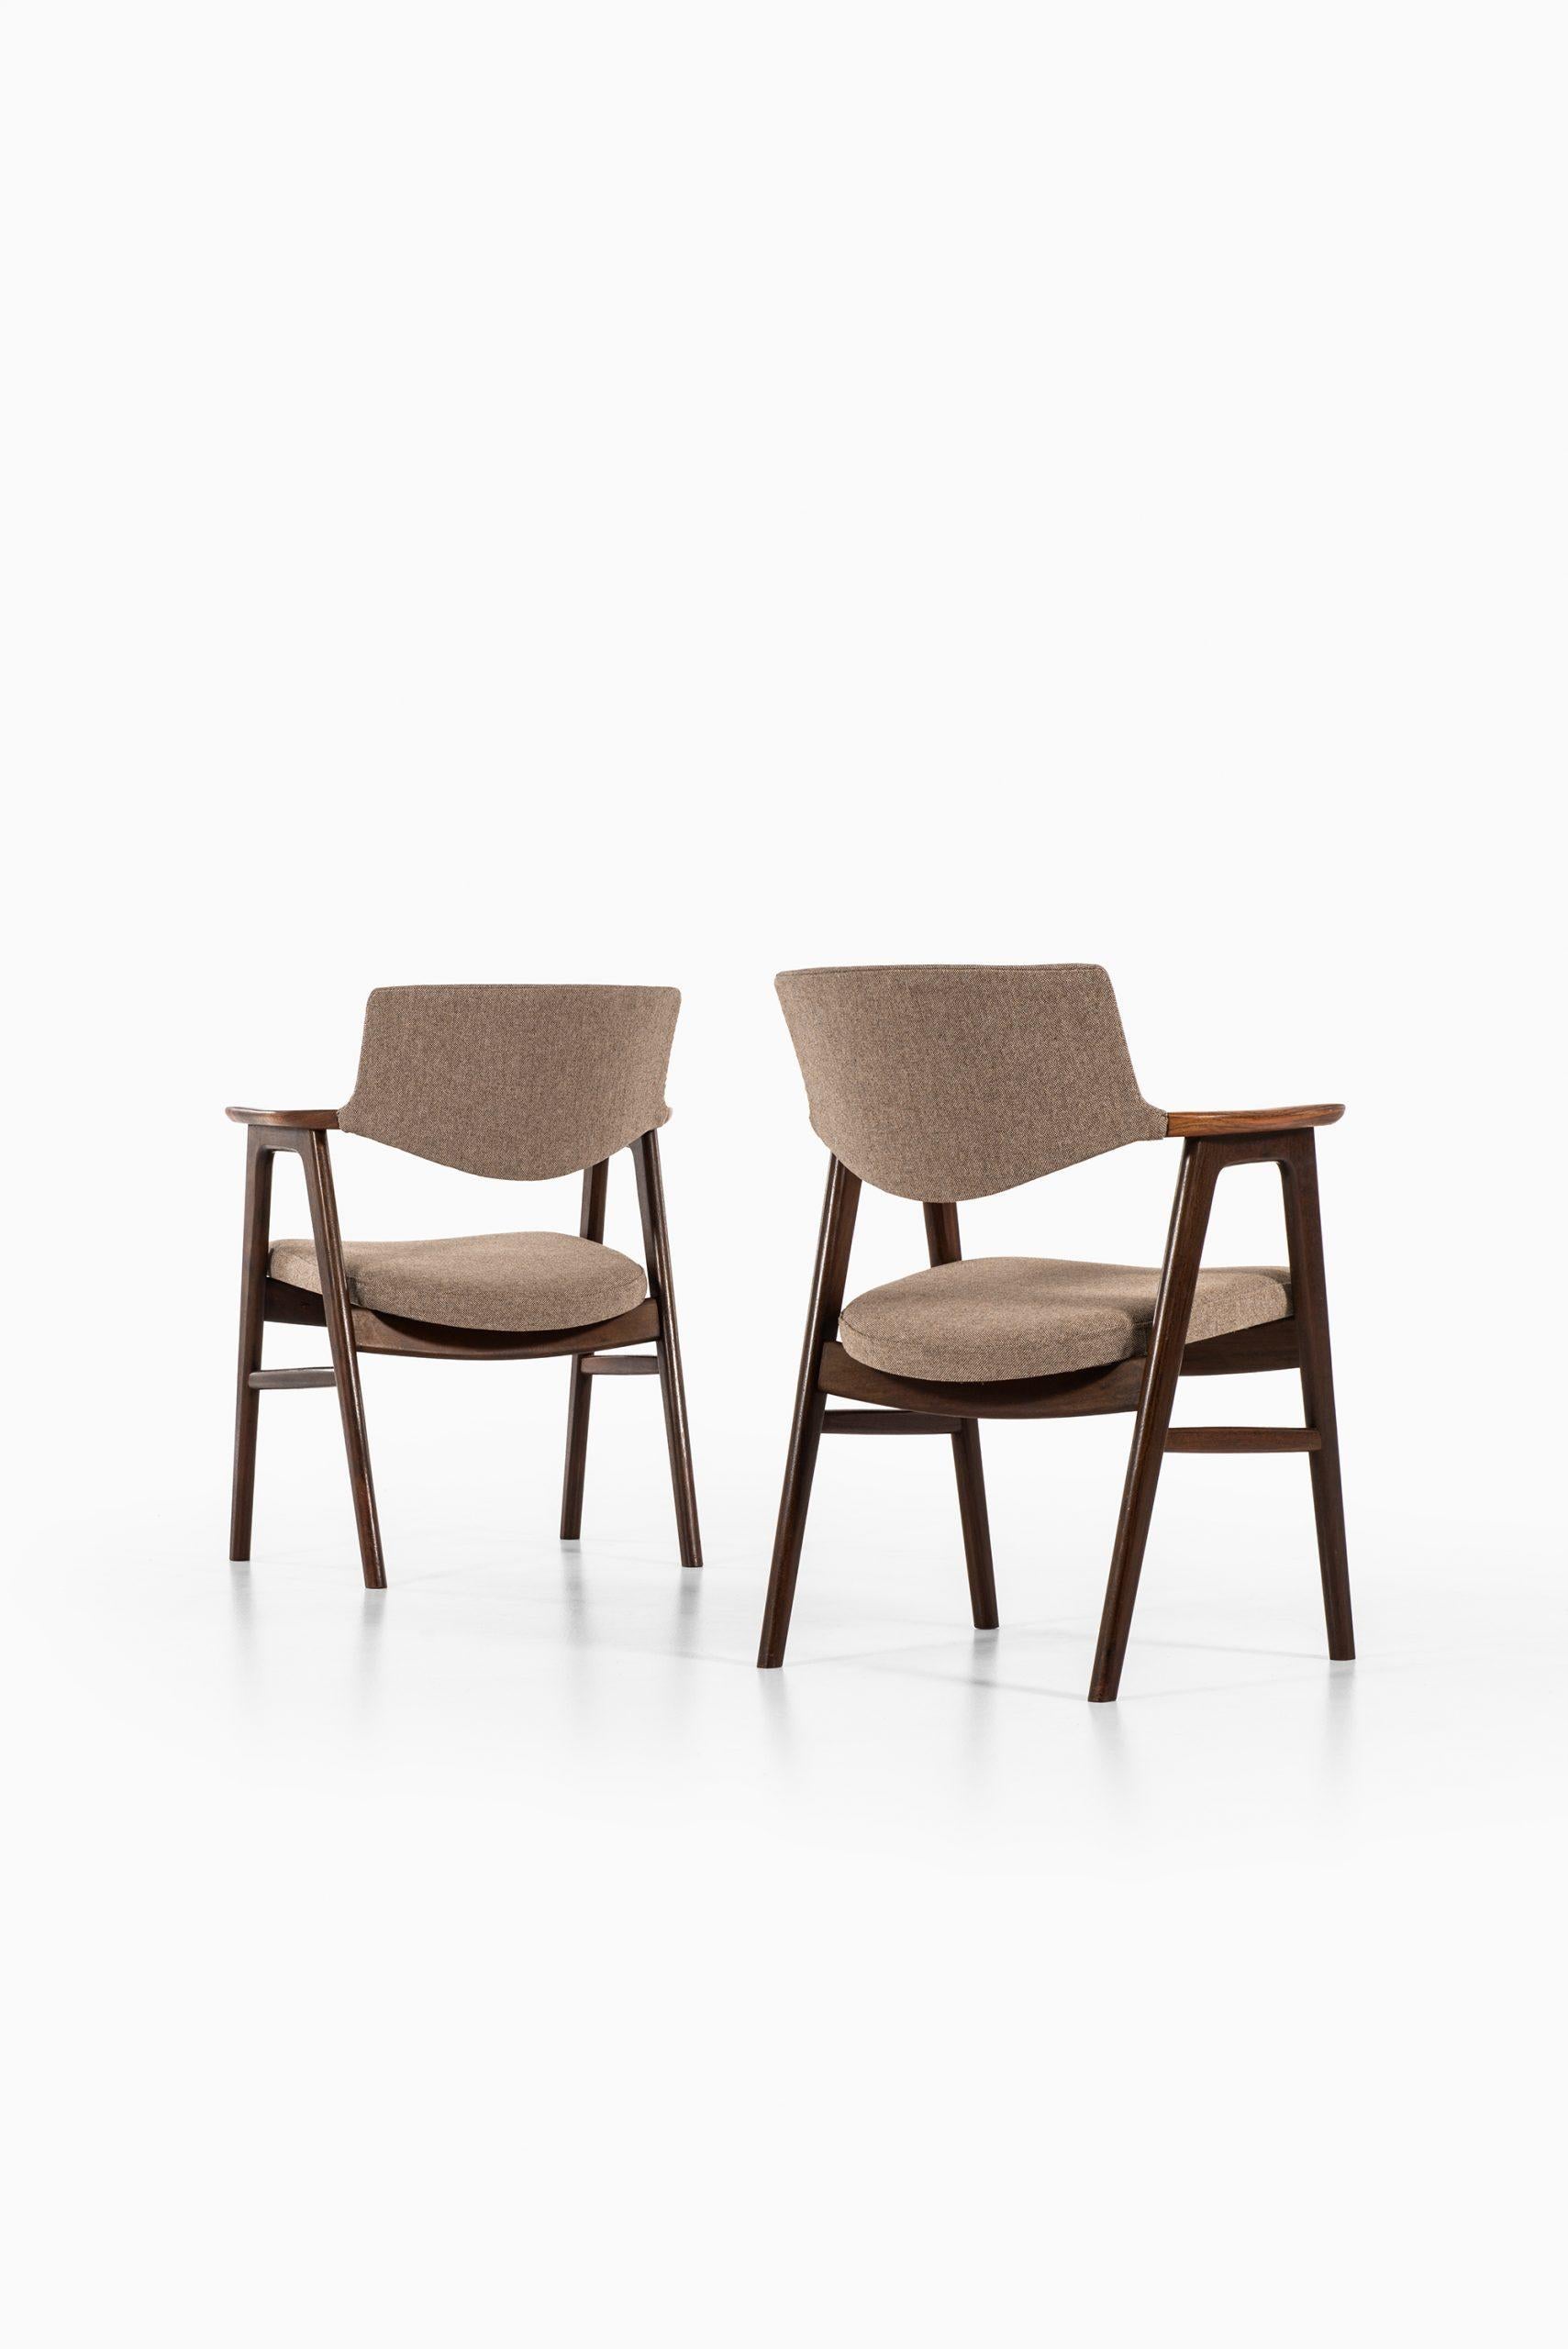 Erik Kirkegaard Armchairs / Dining Chairs by Høng Stolefabrik in Denmark For Sale 1